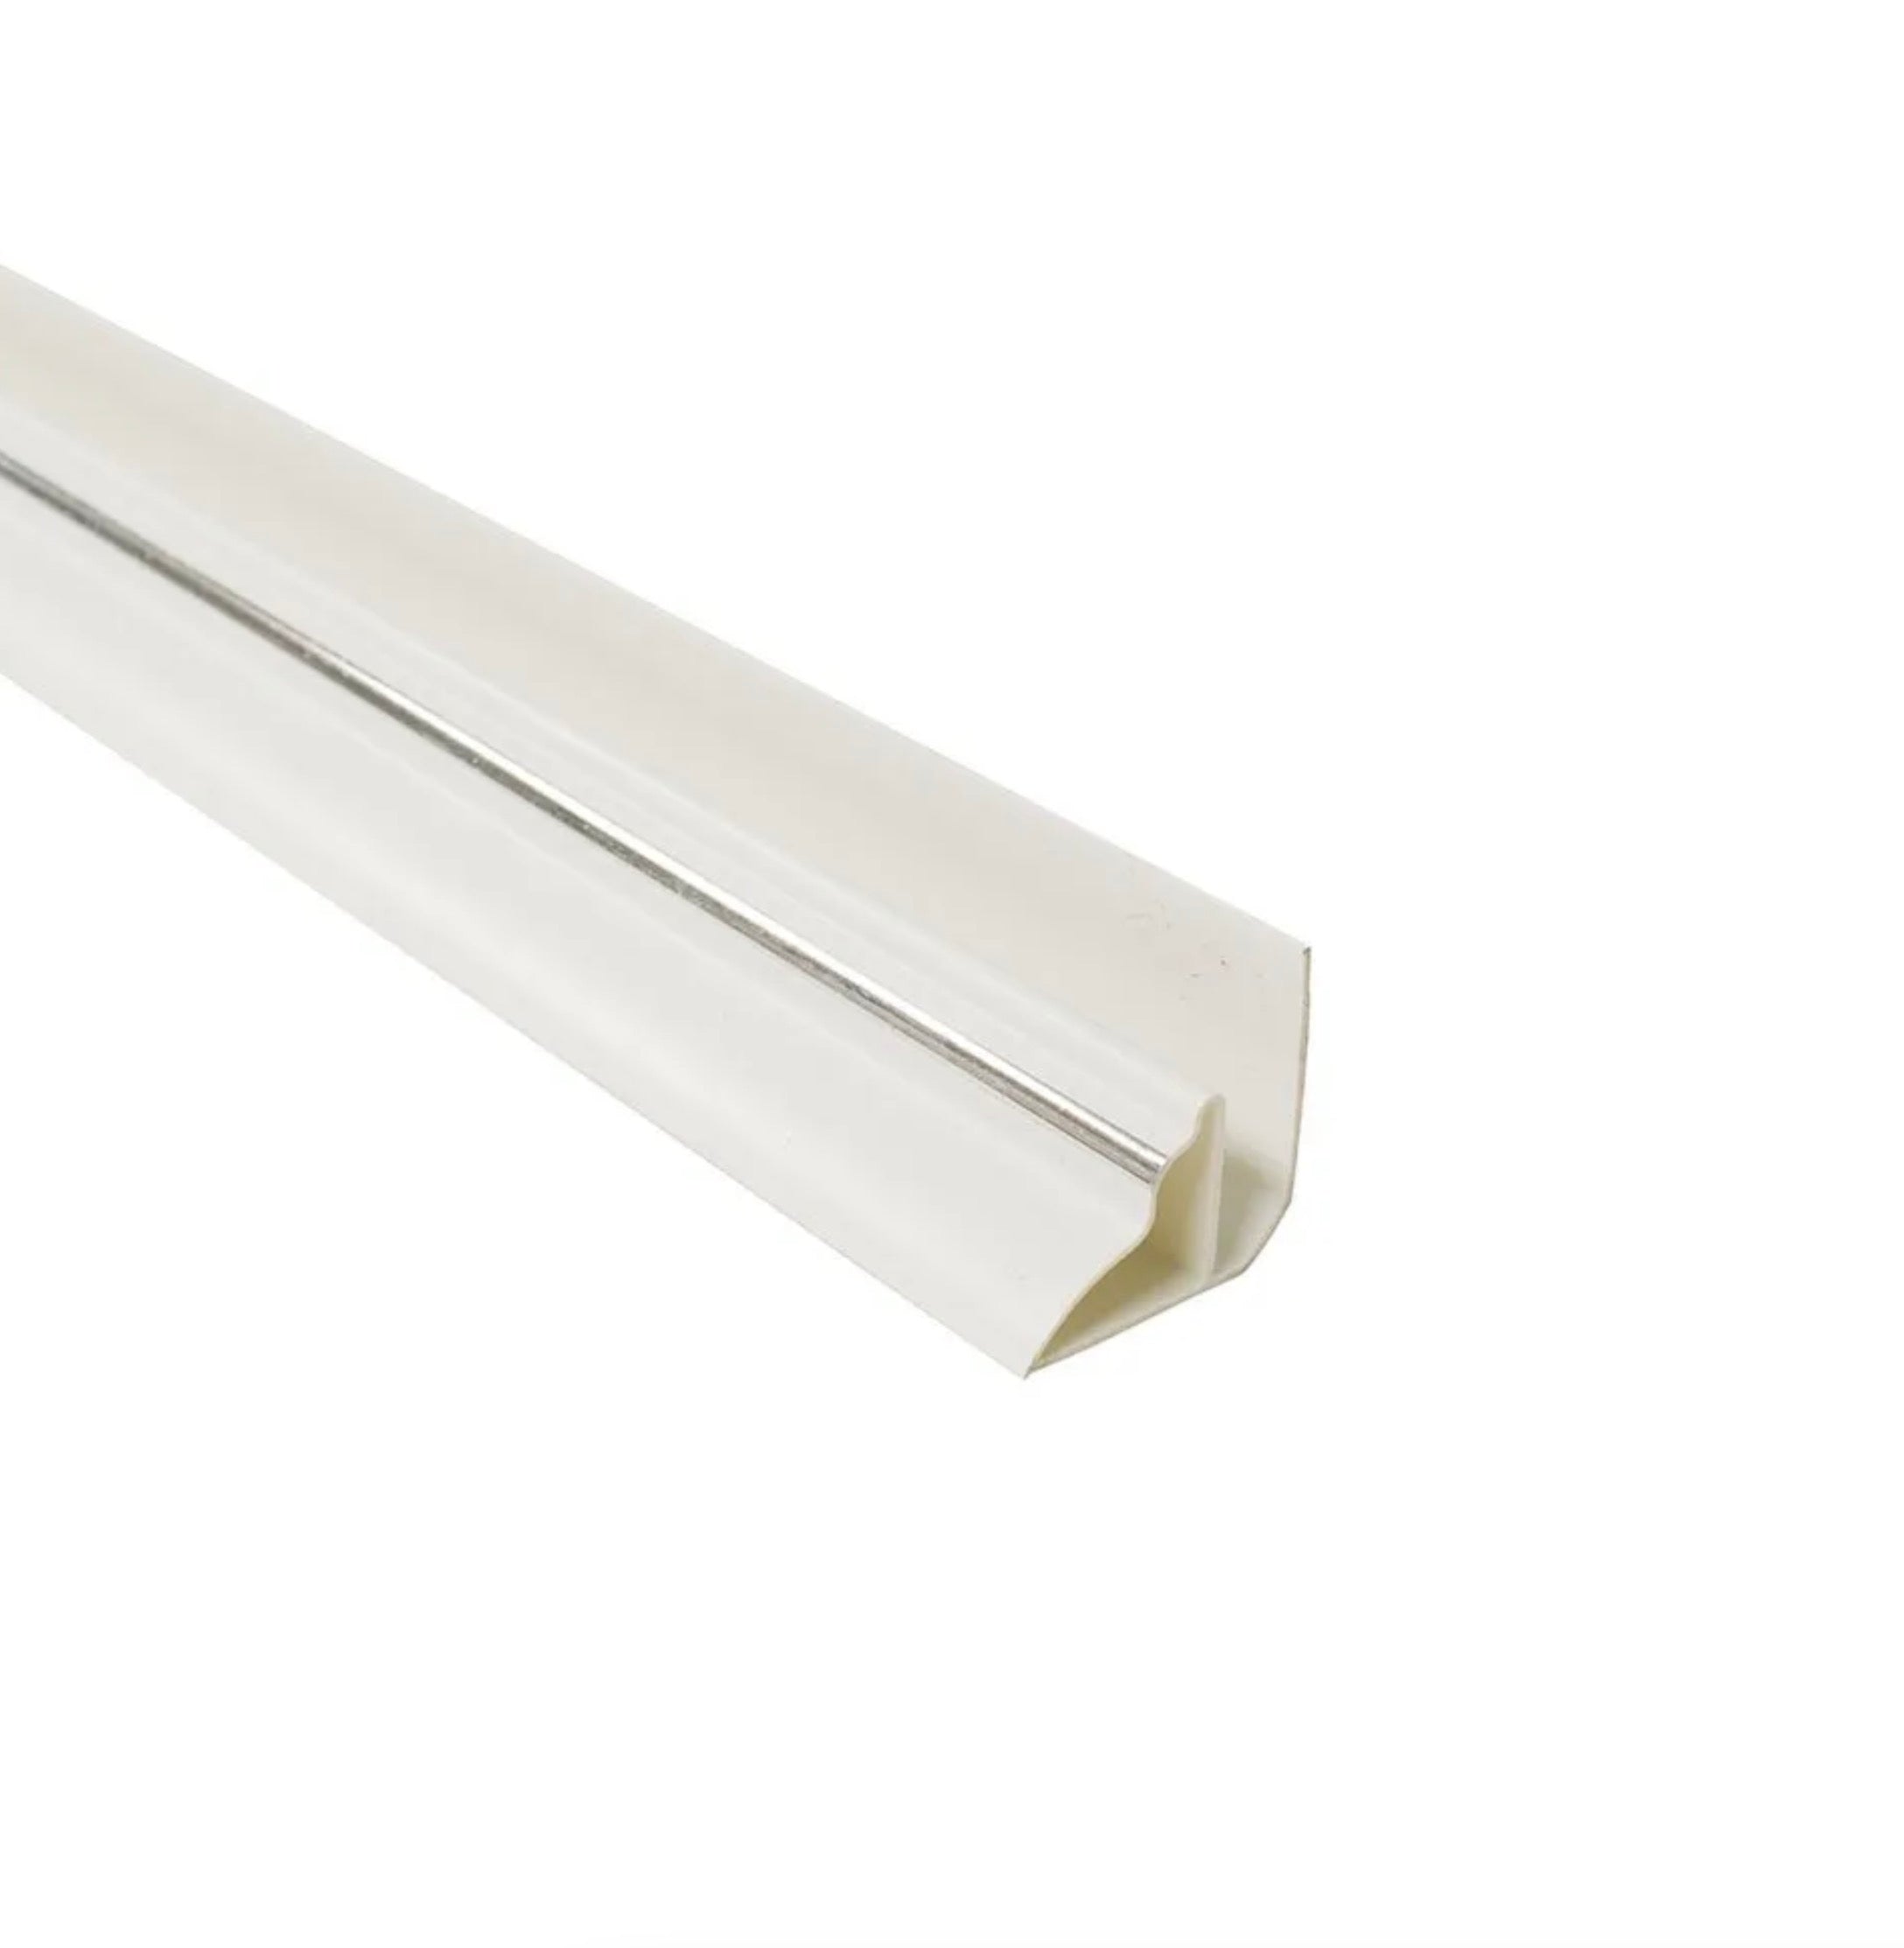 Ceiling Cornice Trim - White With Chrome Strip